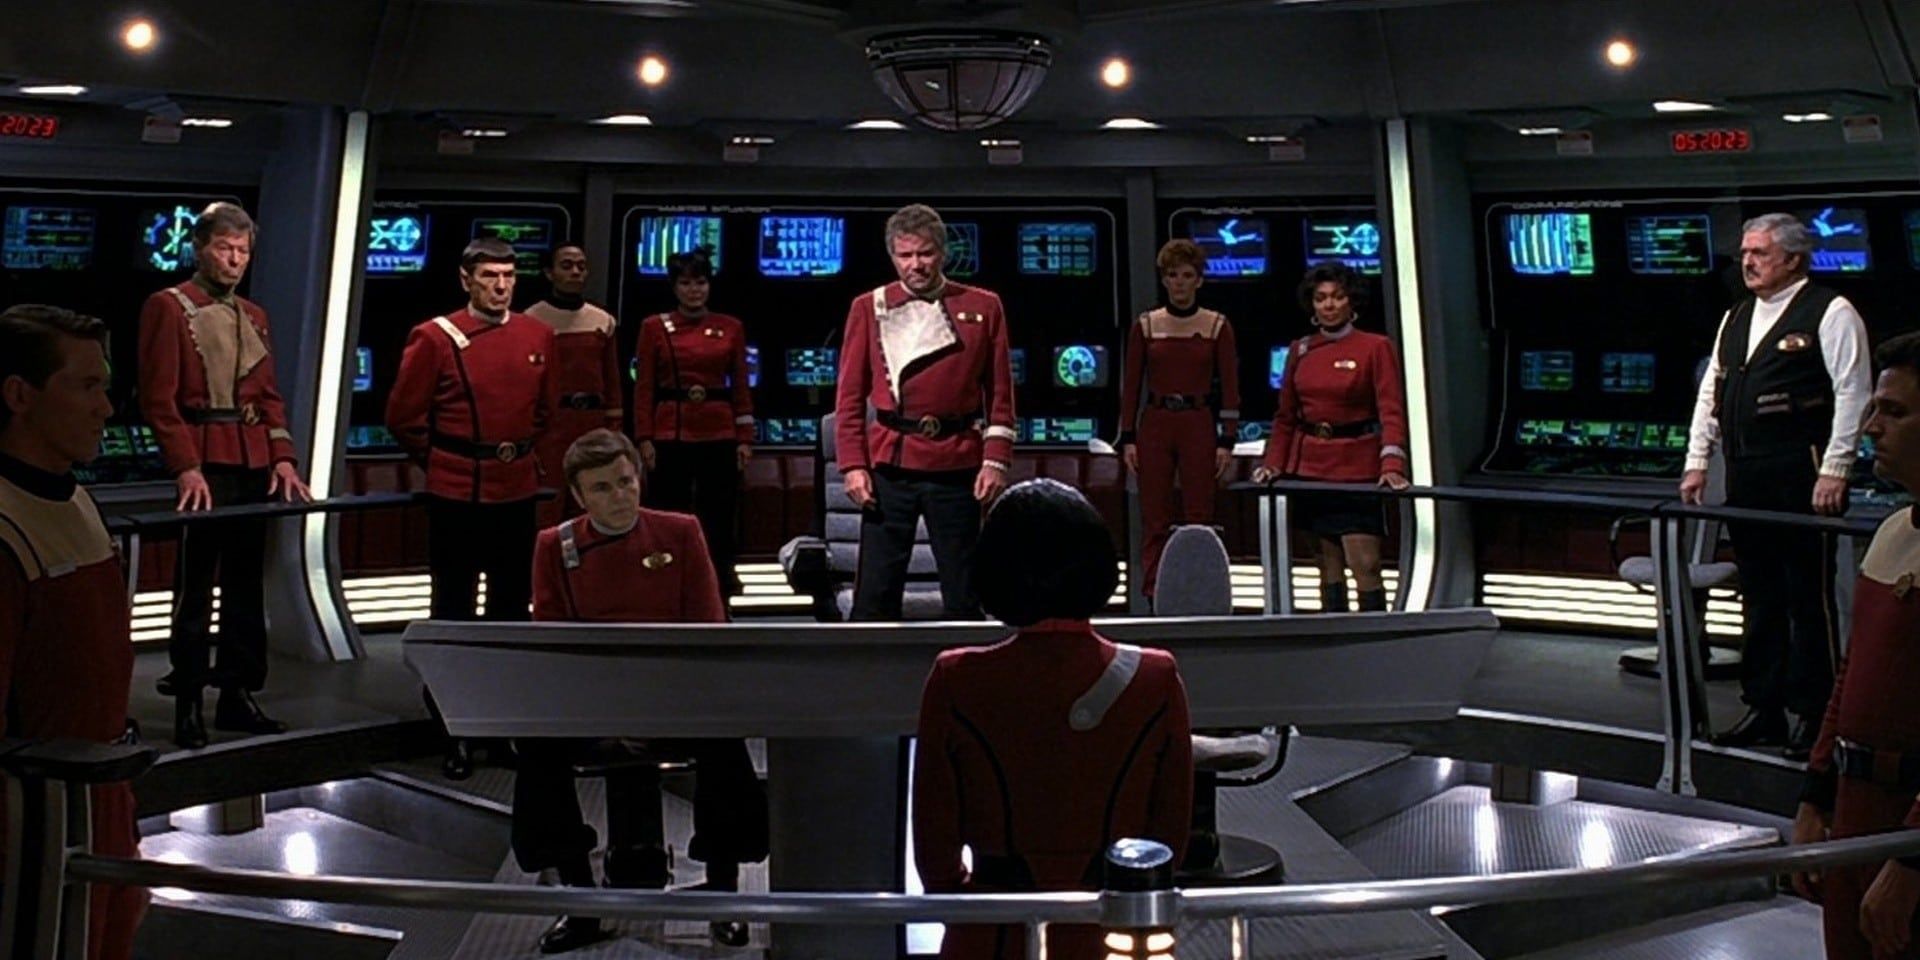 The Enterprise crew in Star Trek VI's final episode